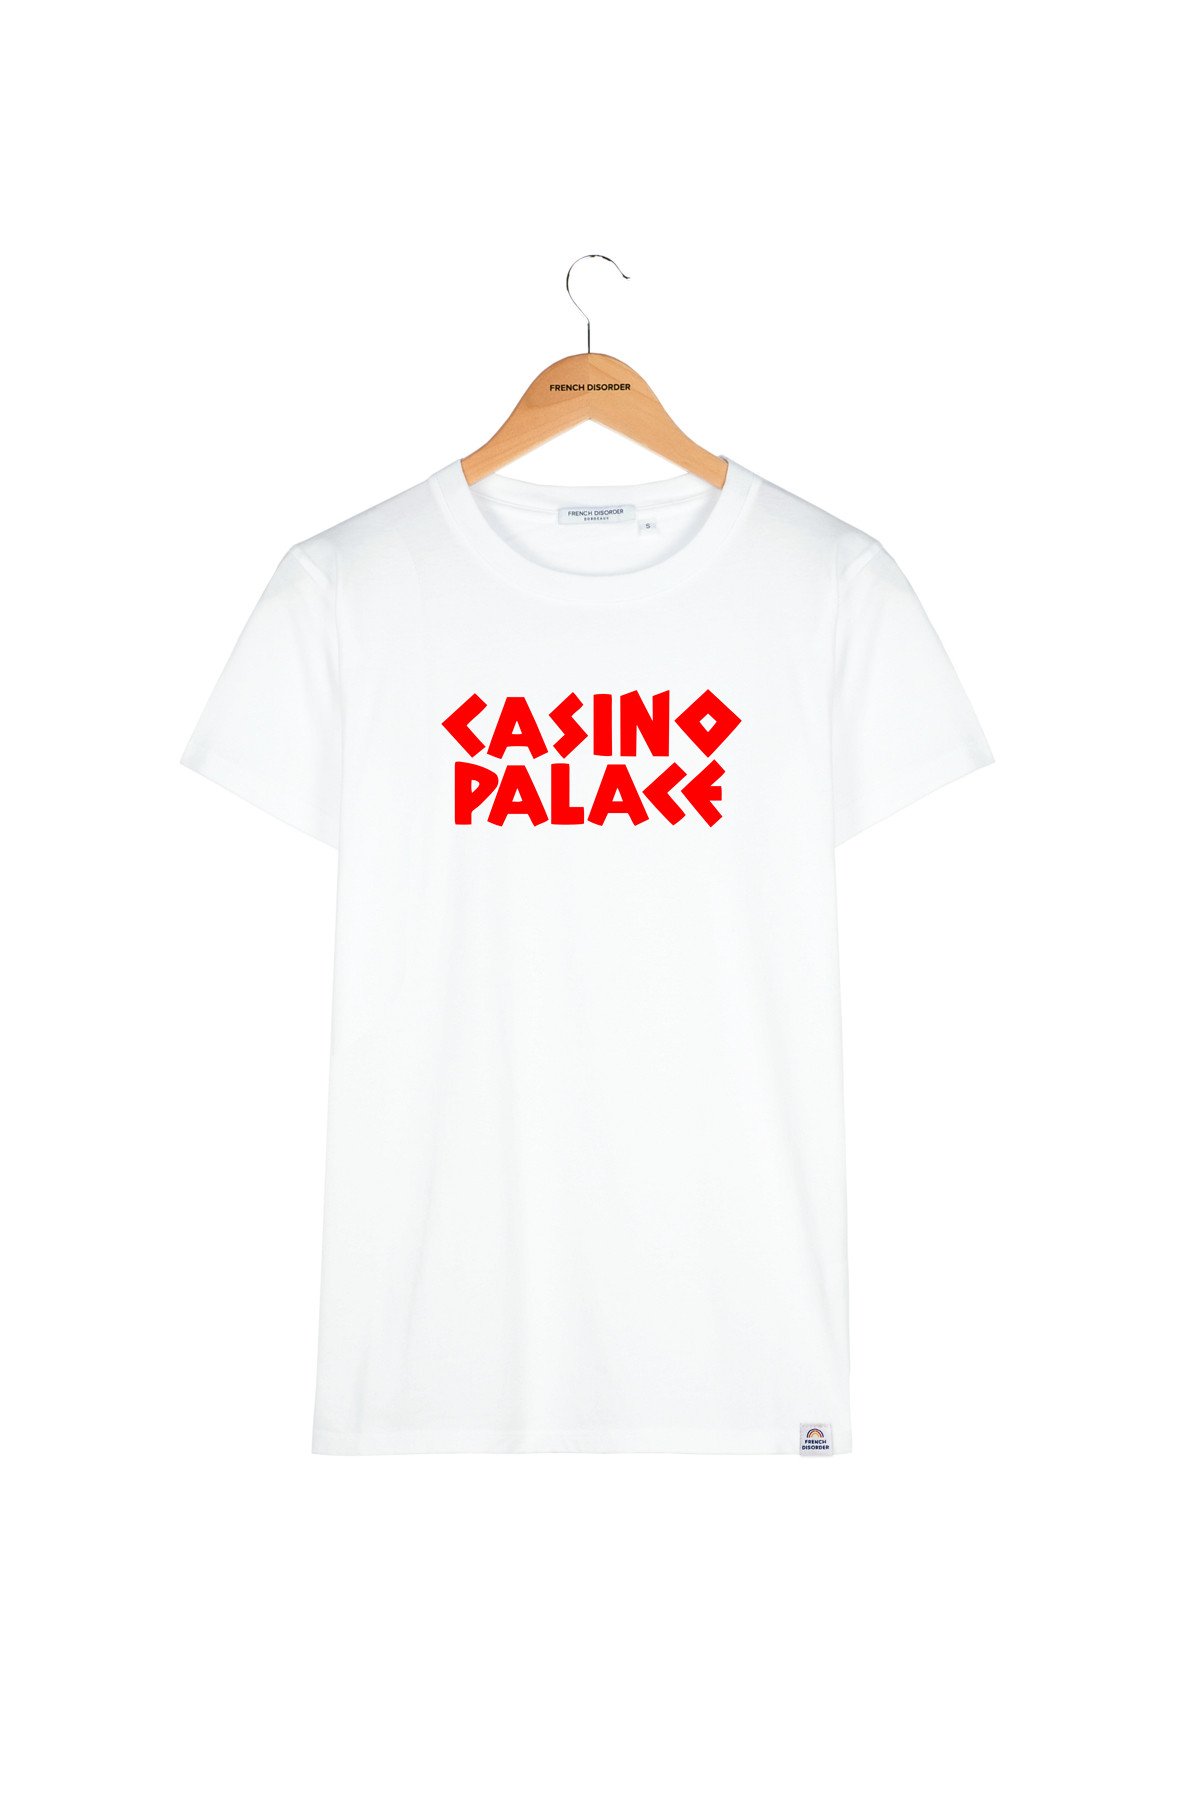 Photo de T-SHIRTS COL ROND Tshirt CASINO PALACE chez French Disorder